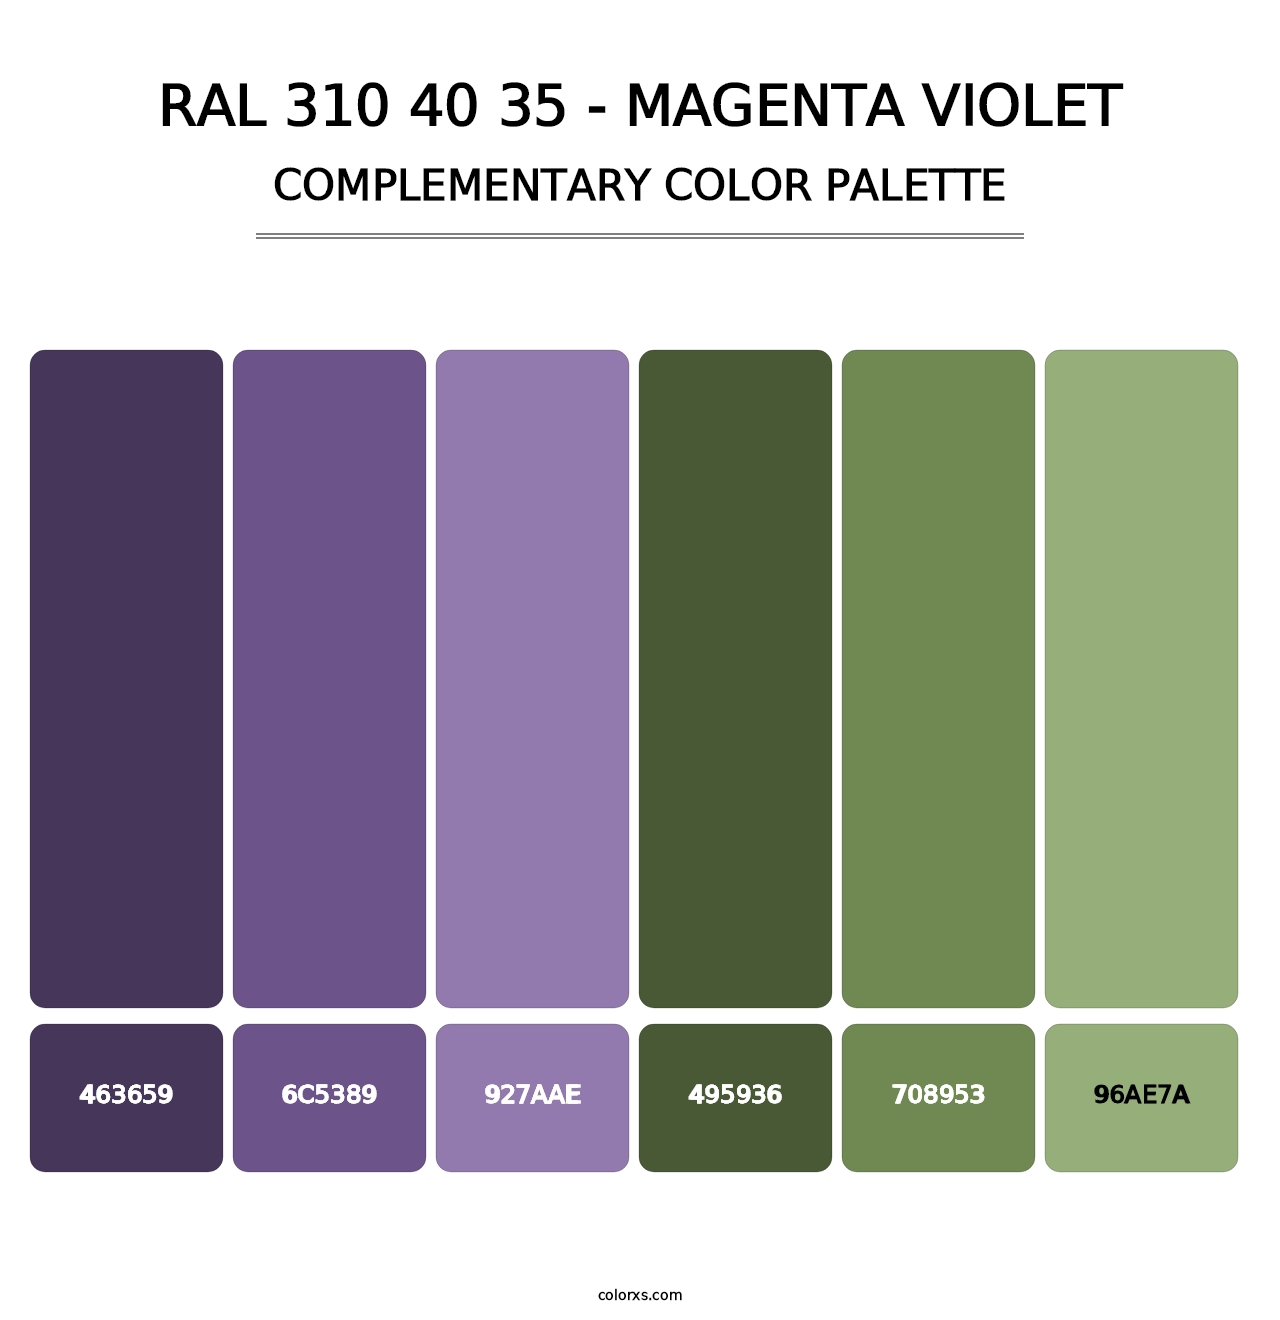 RAL 310 40 35 - Magenta Violet - Complementary Color Palette